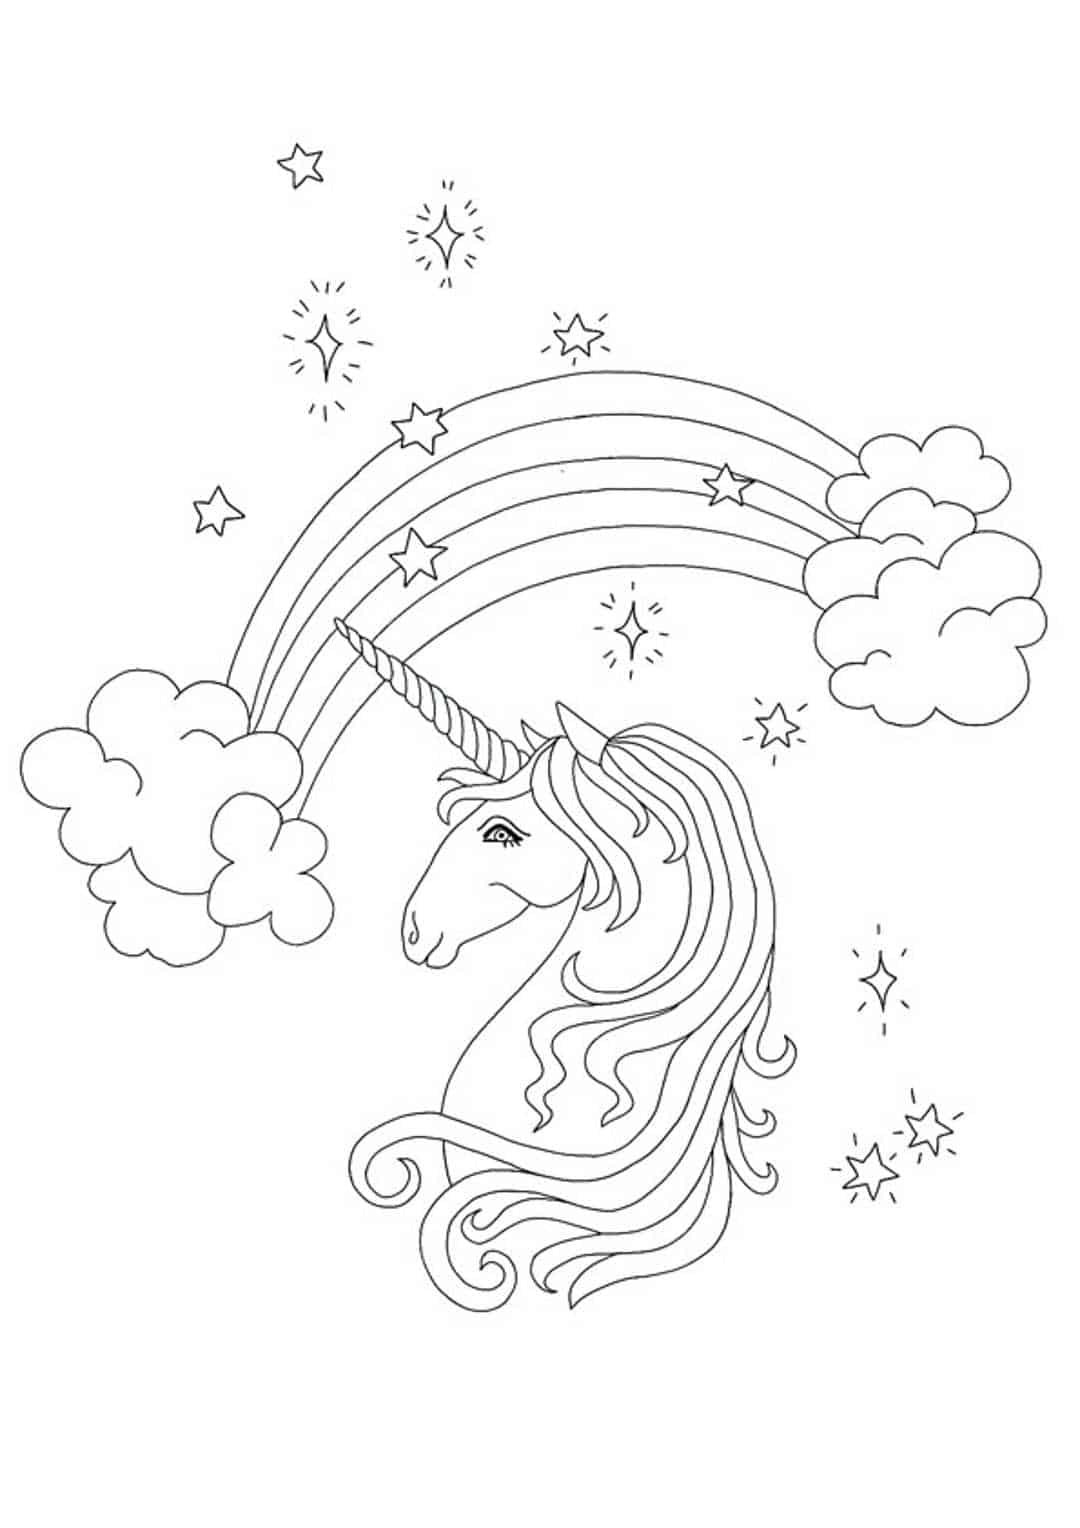 Rainbow unicorn head coloring page